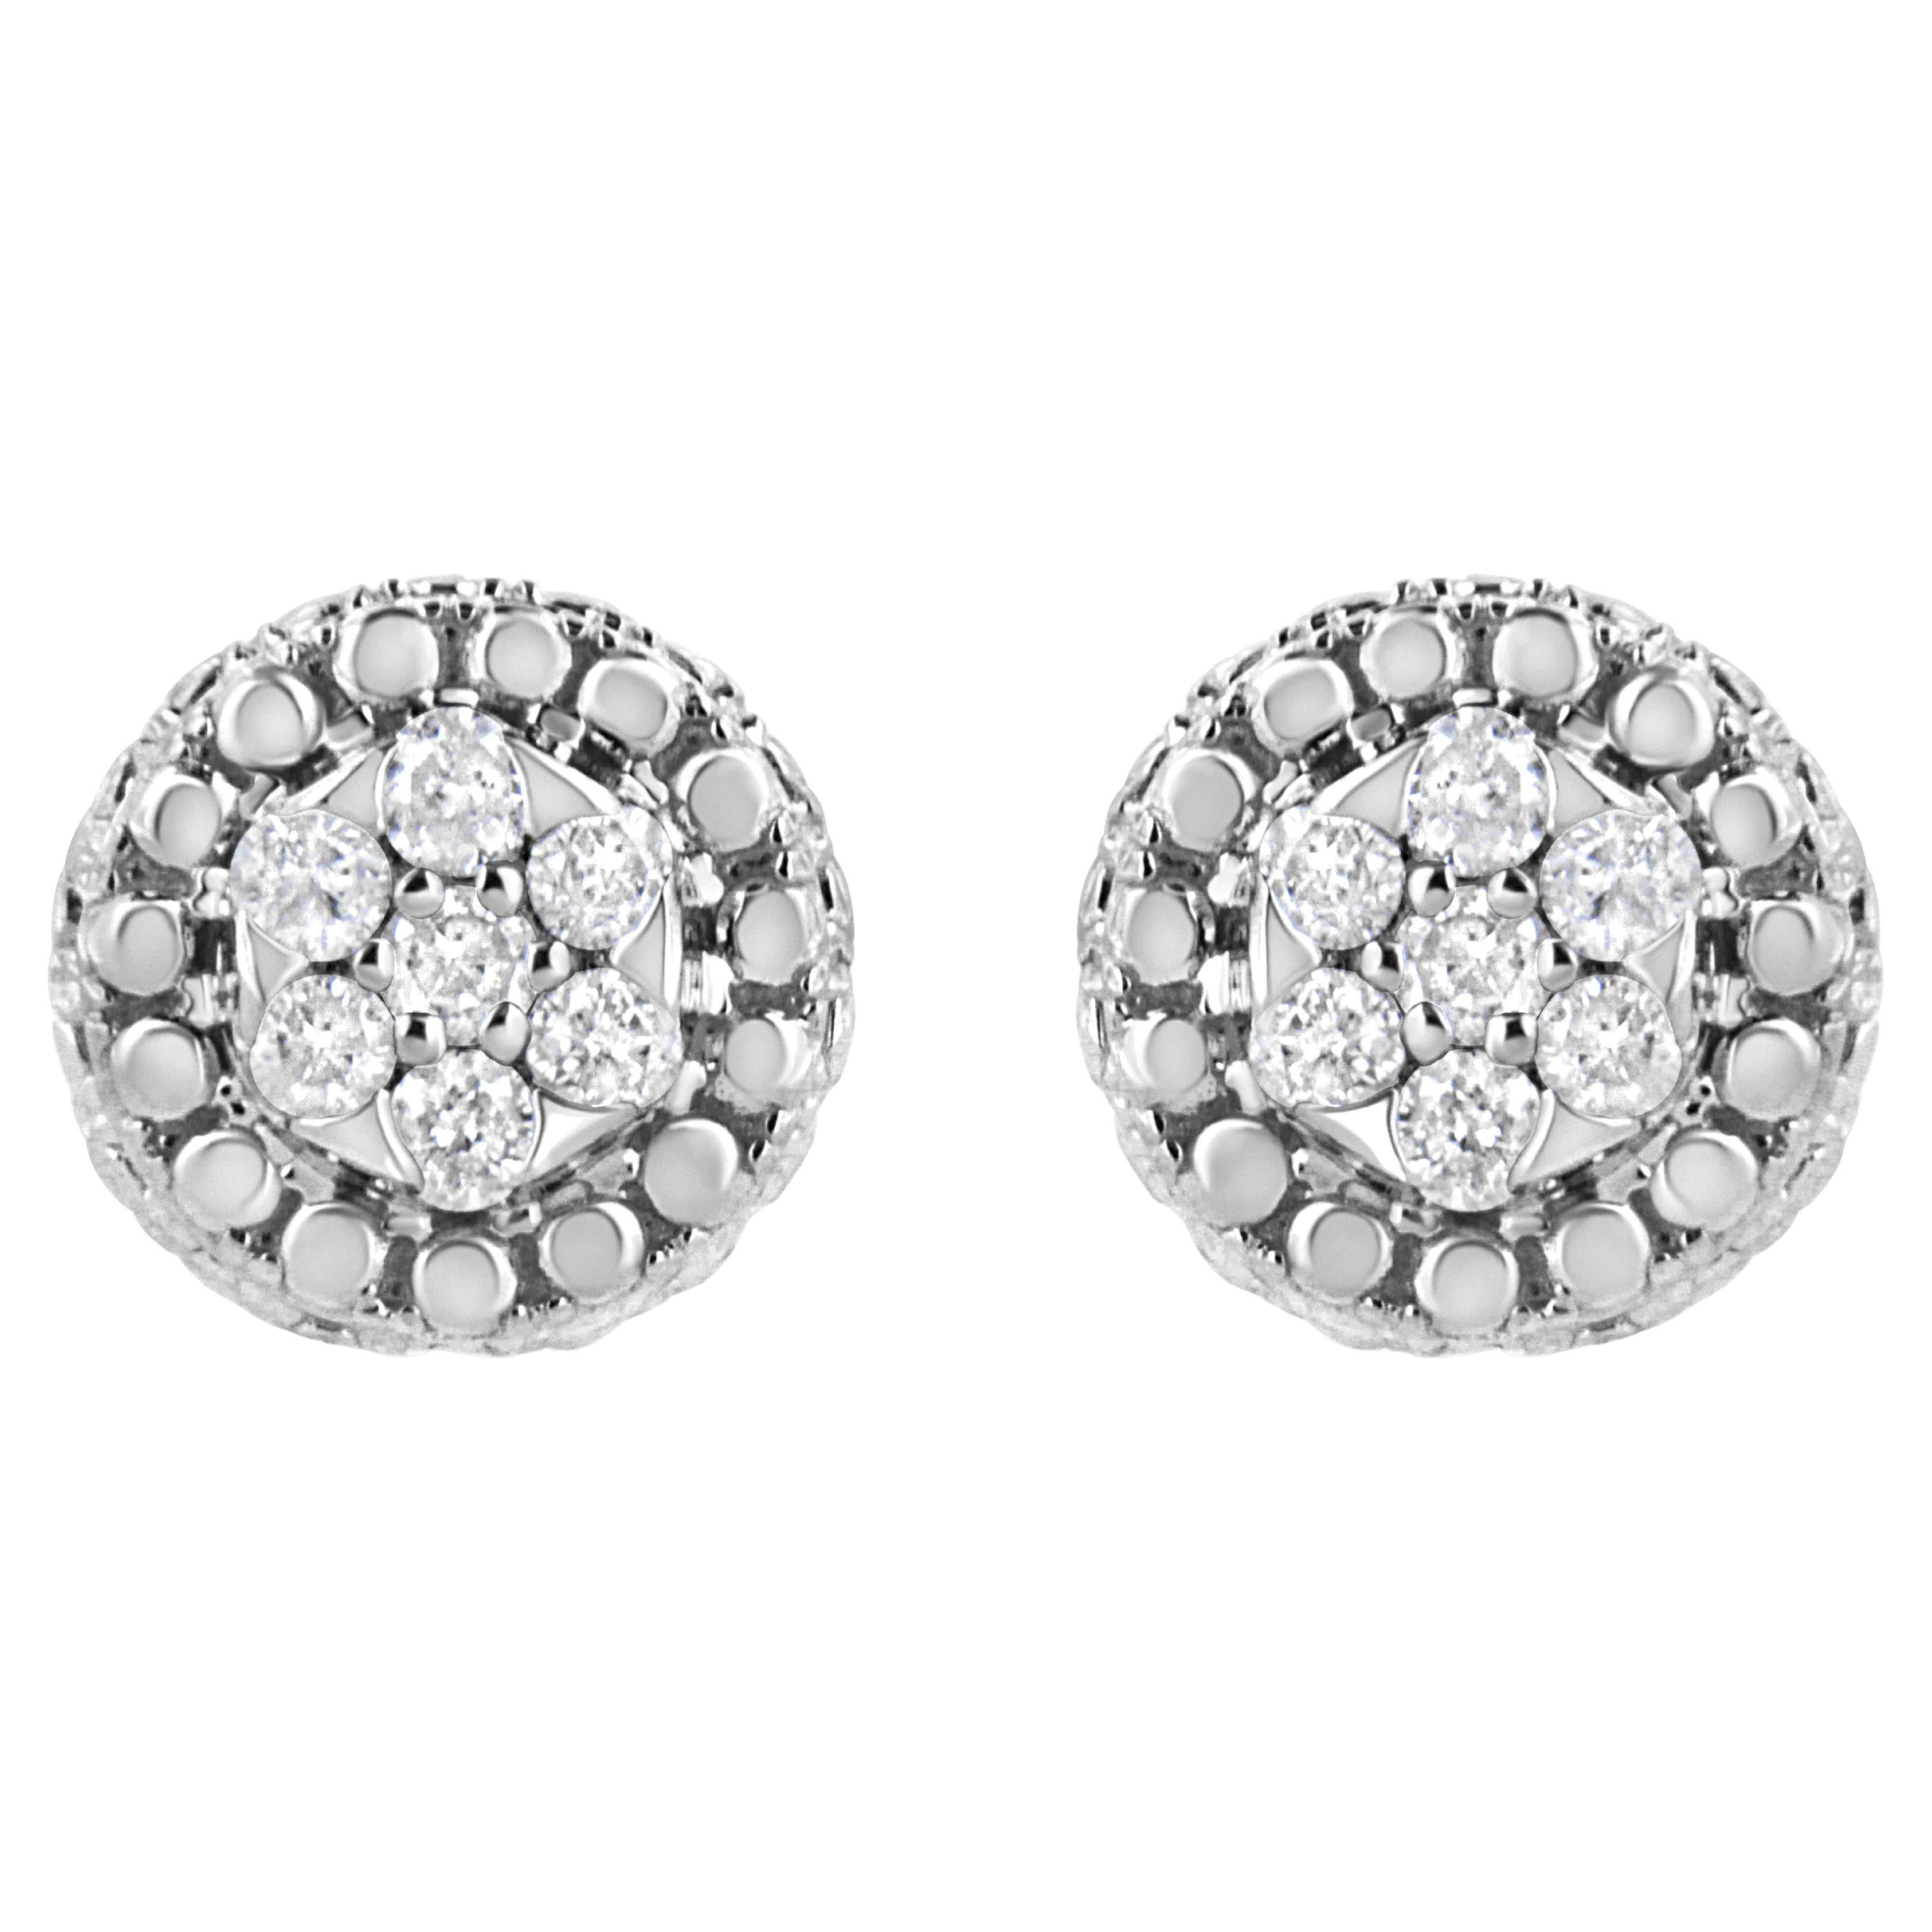 .925 Sterling Silver 1/3 Carat 7 Stone Pave Set Diamond Beaded Stud Earrings